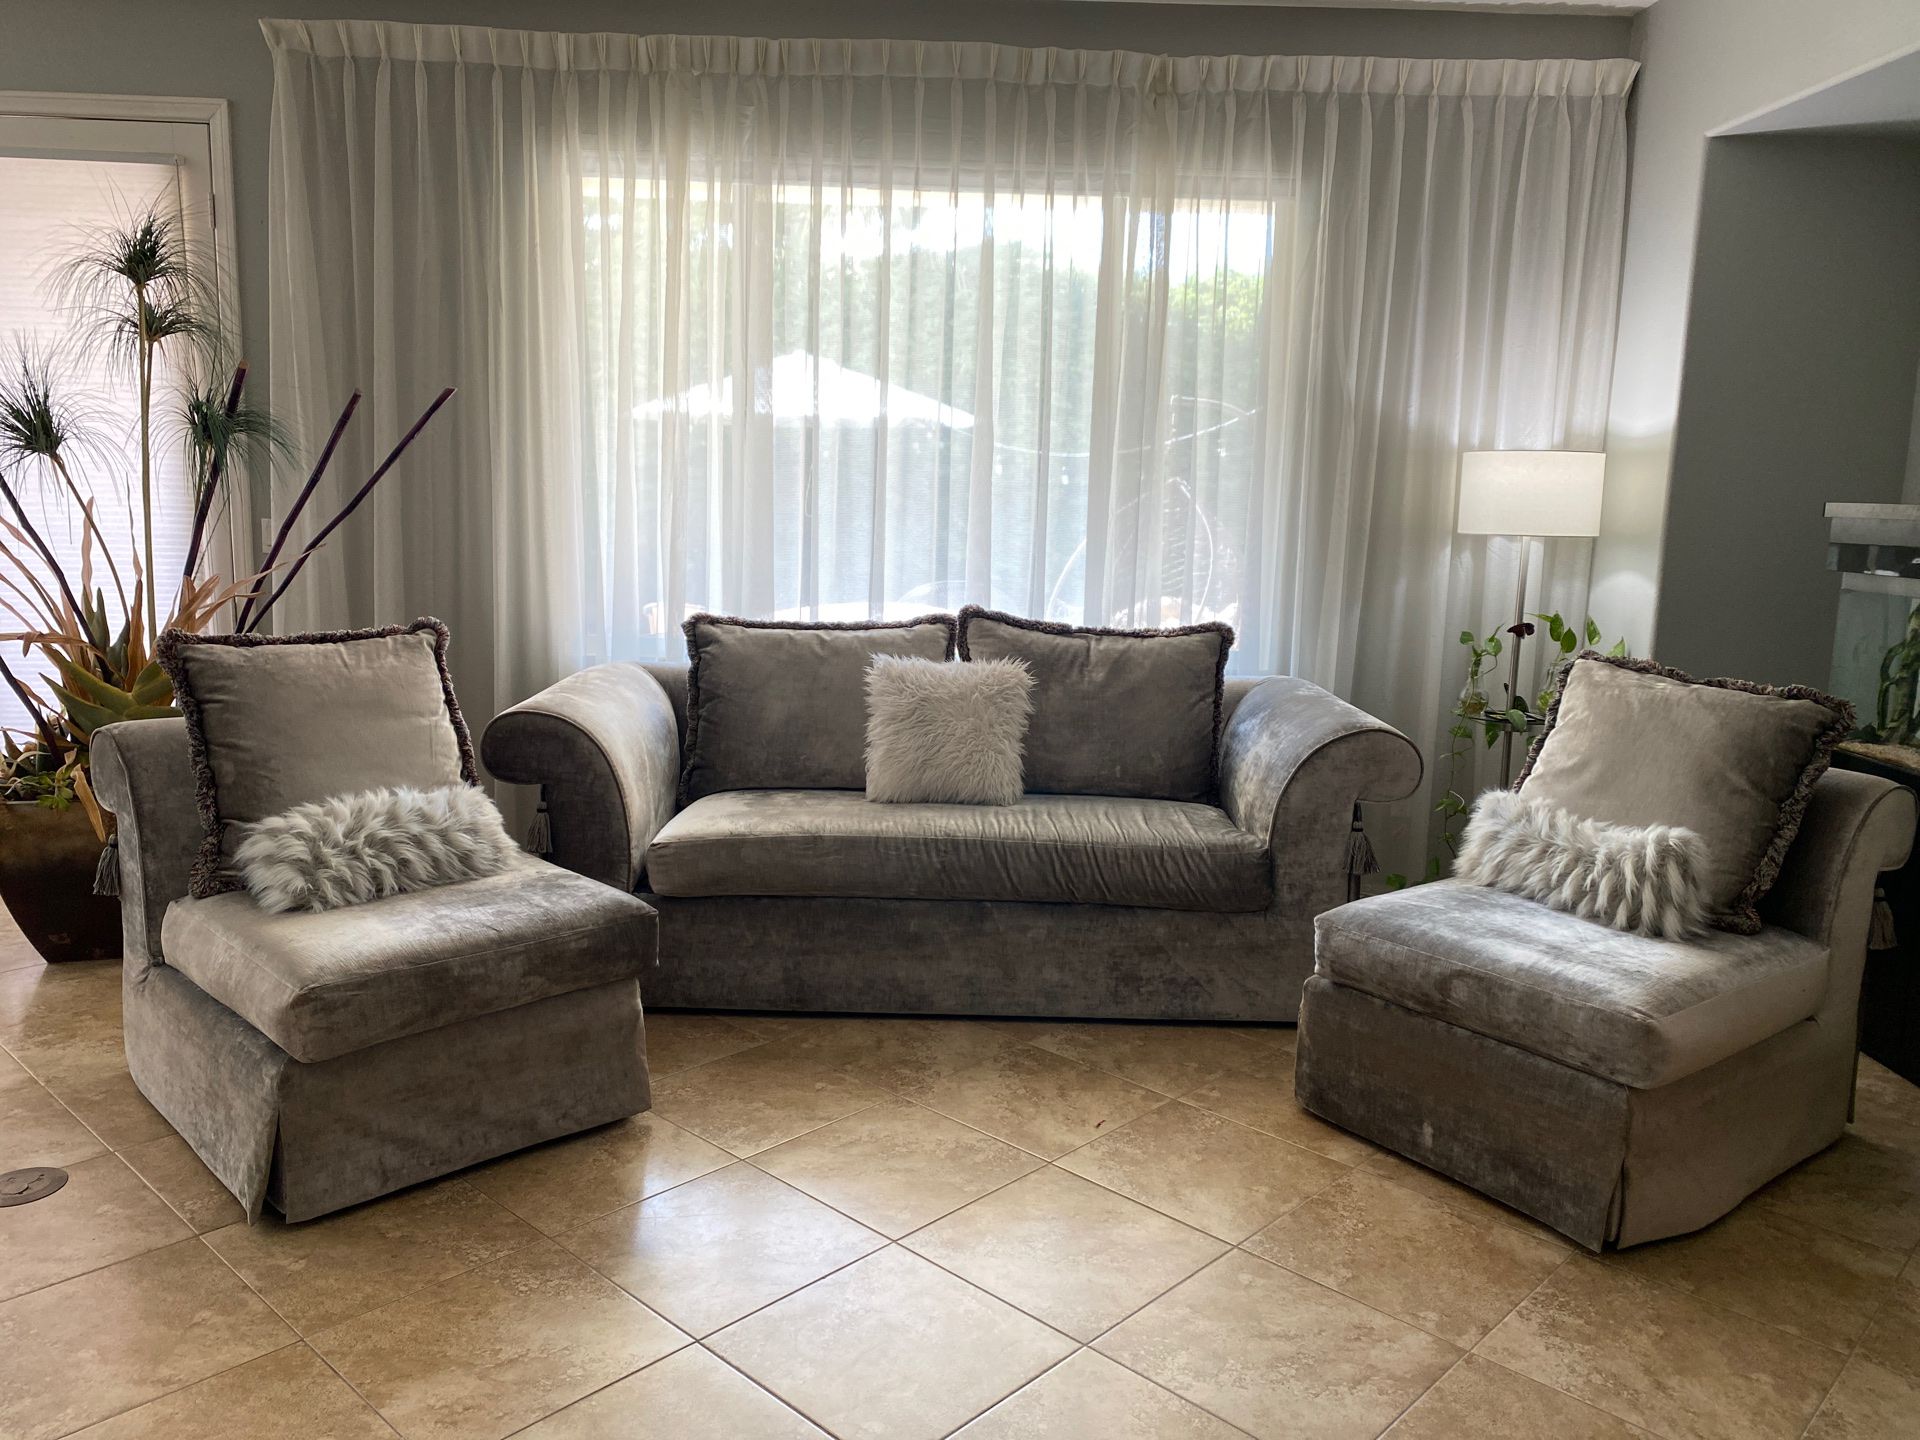 Modern mid-century couches